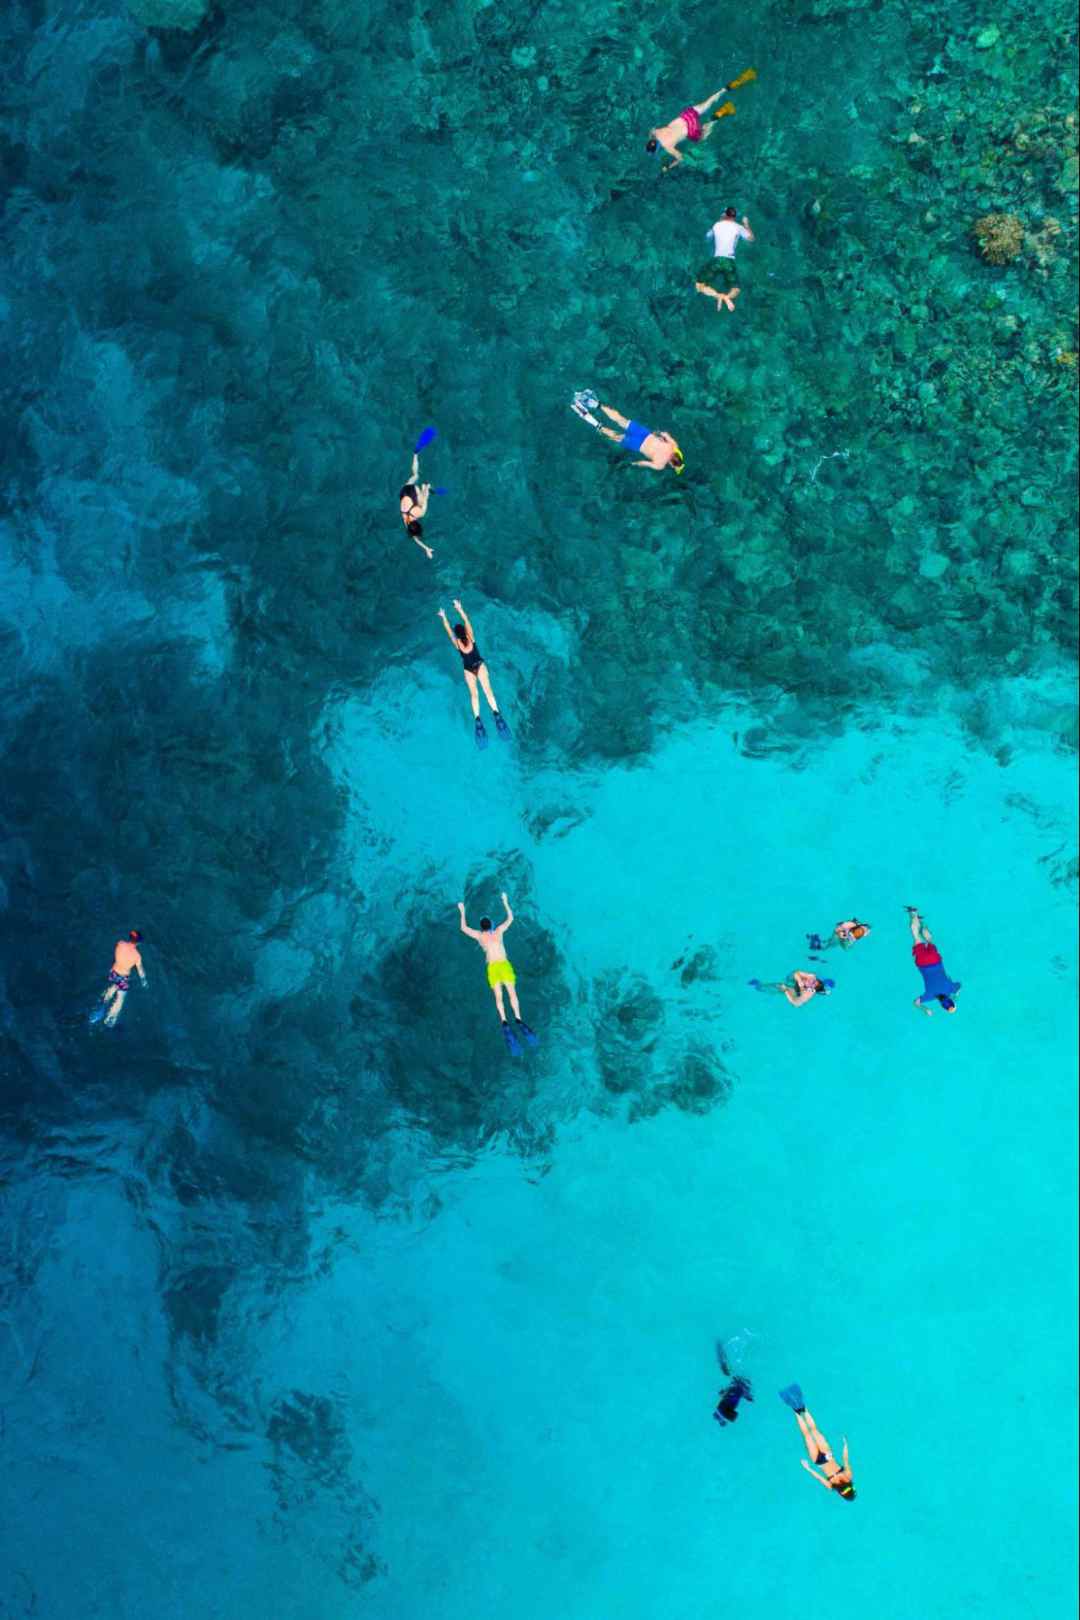 Aerial view of people snorkeling in clear tropical waters